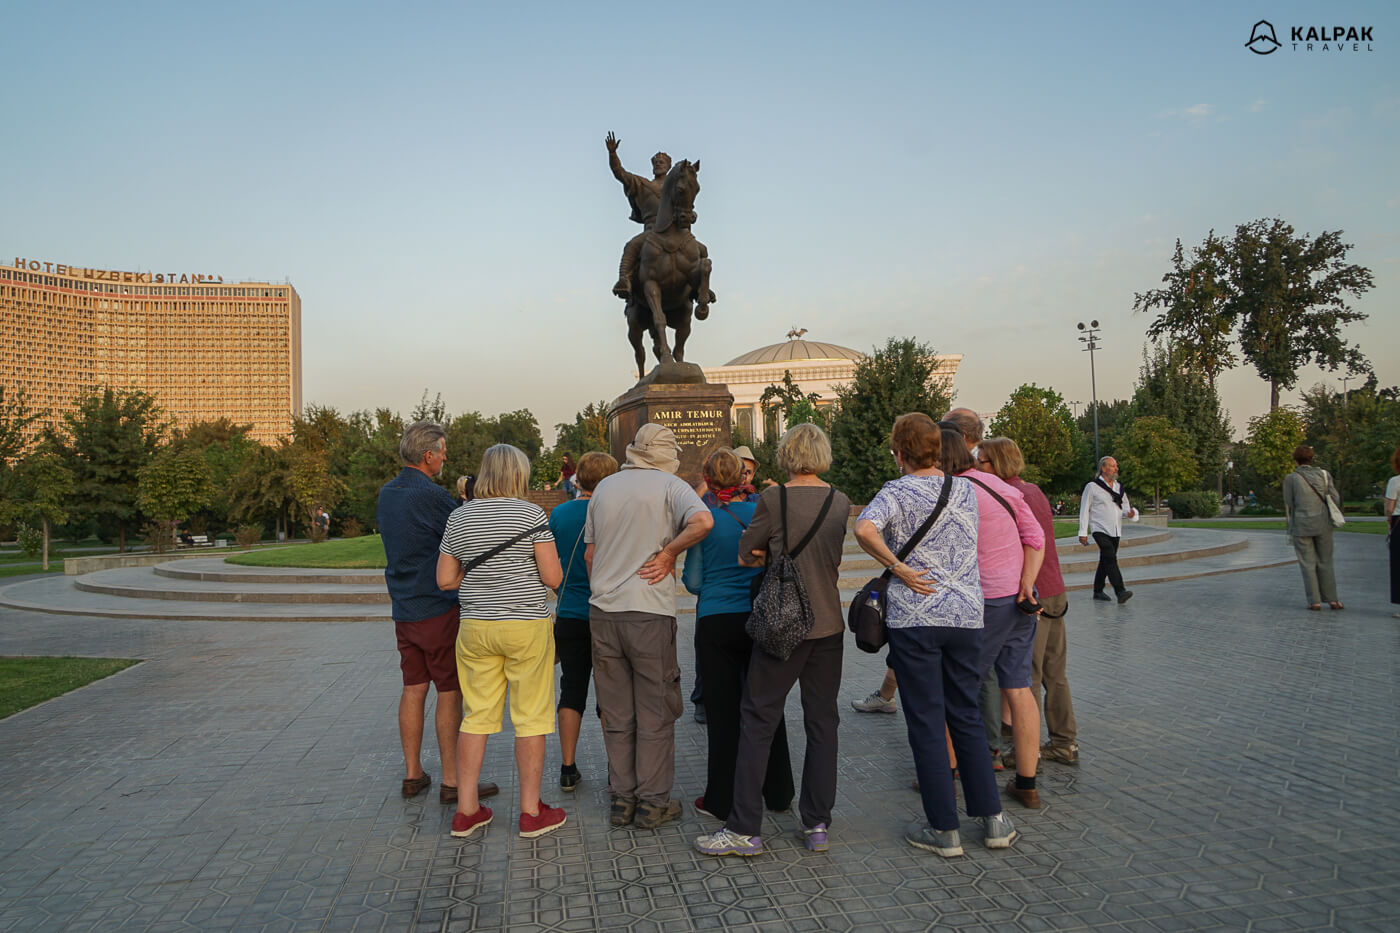 Tashkent city tour